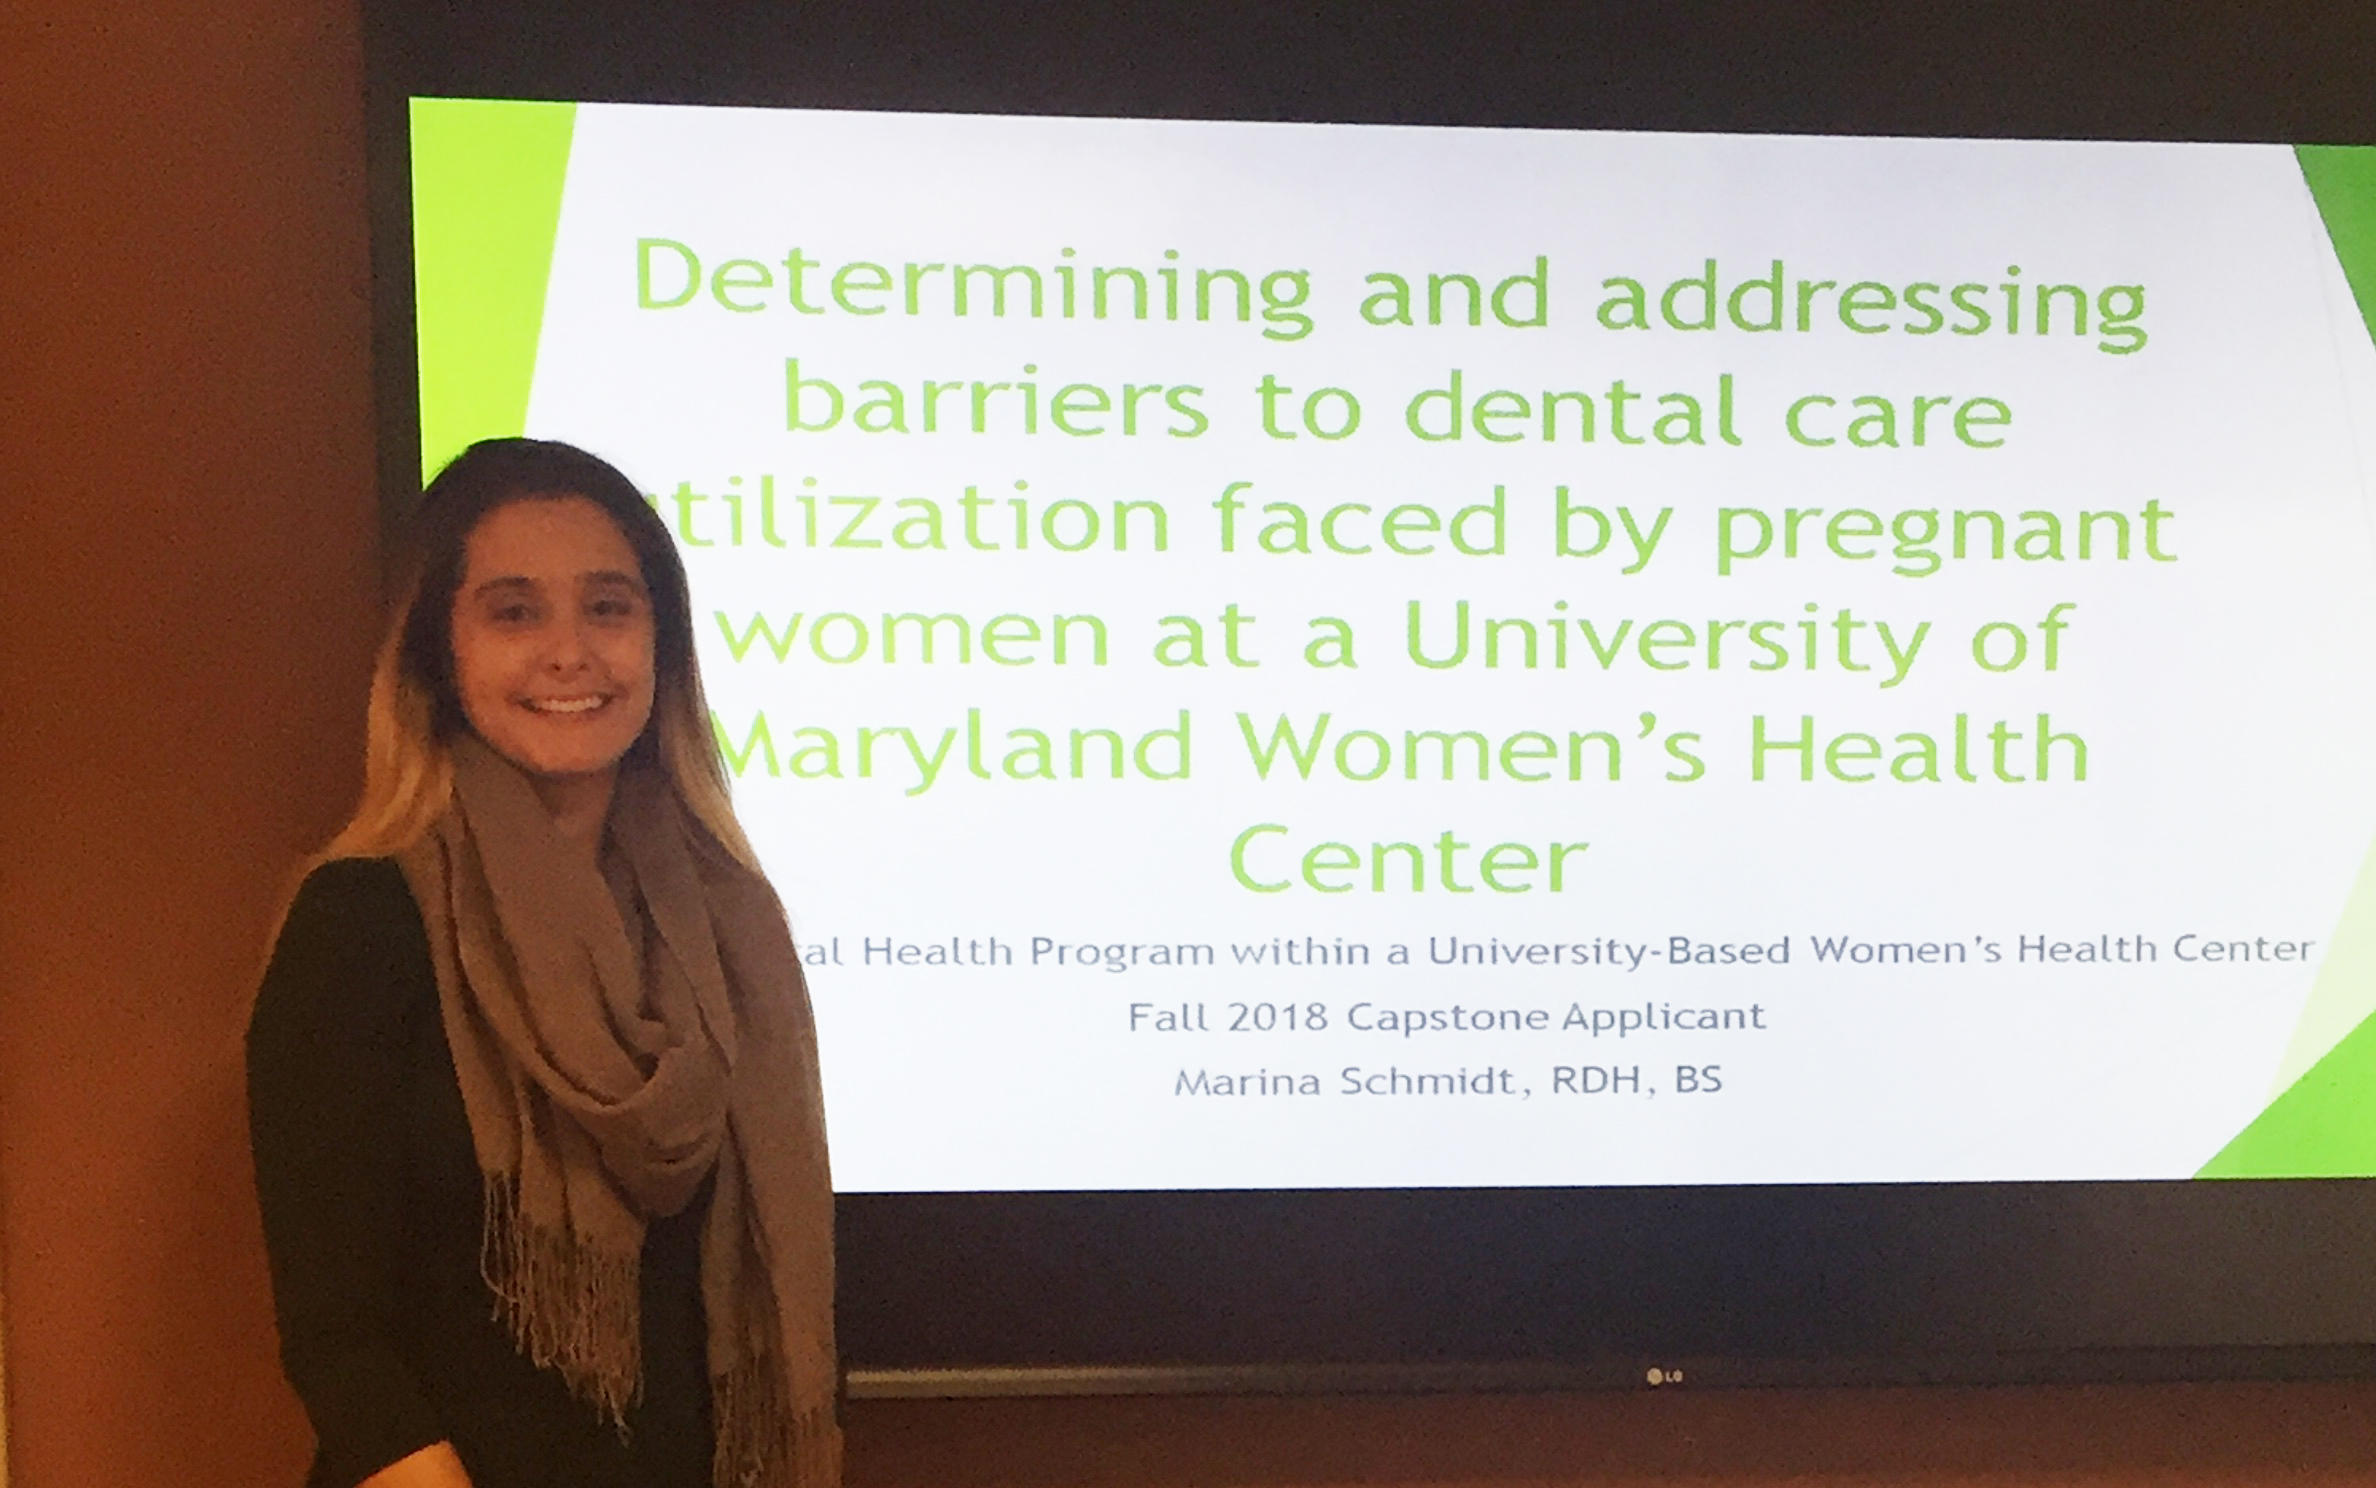 Marina Schmidt presents her Capstone project on prenatal oral health.